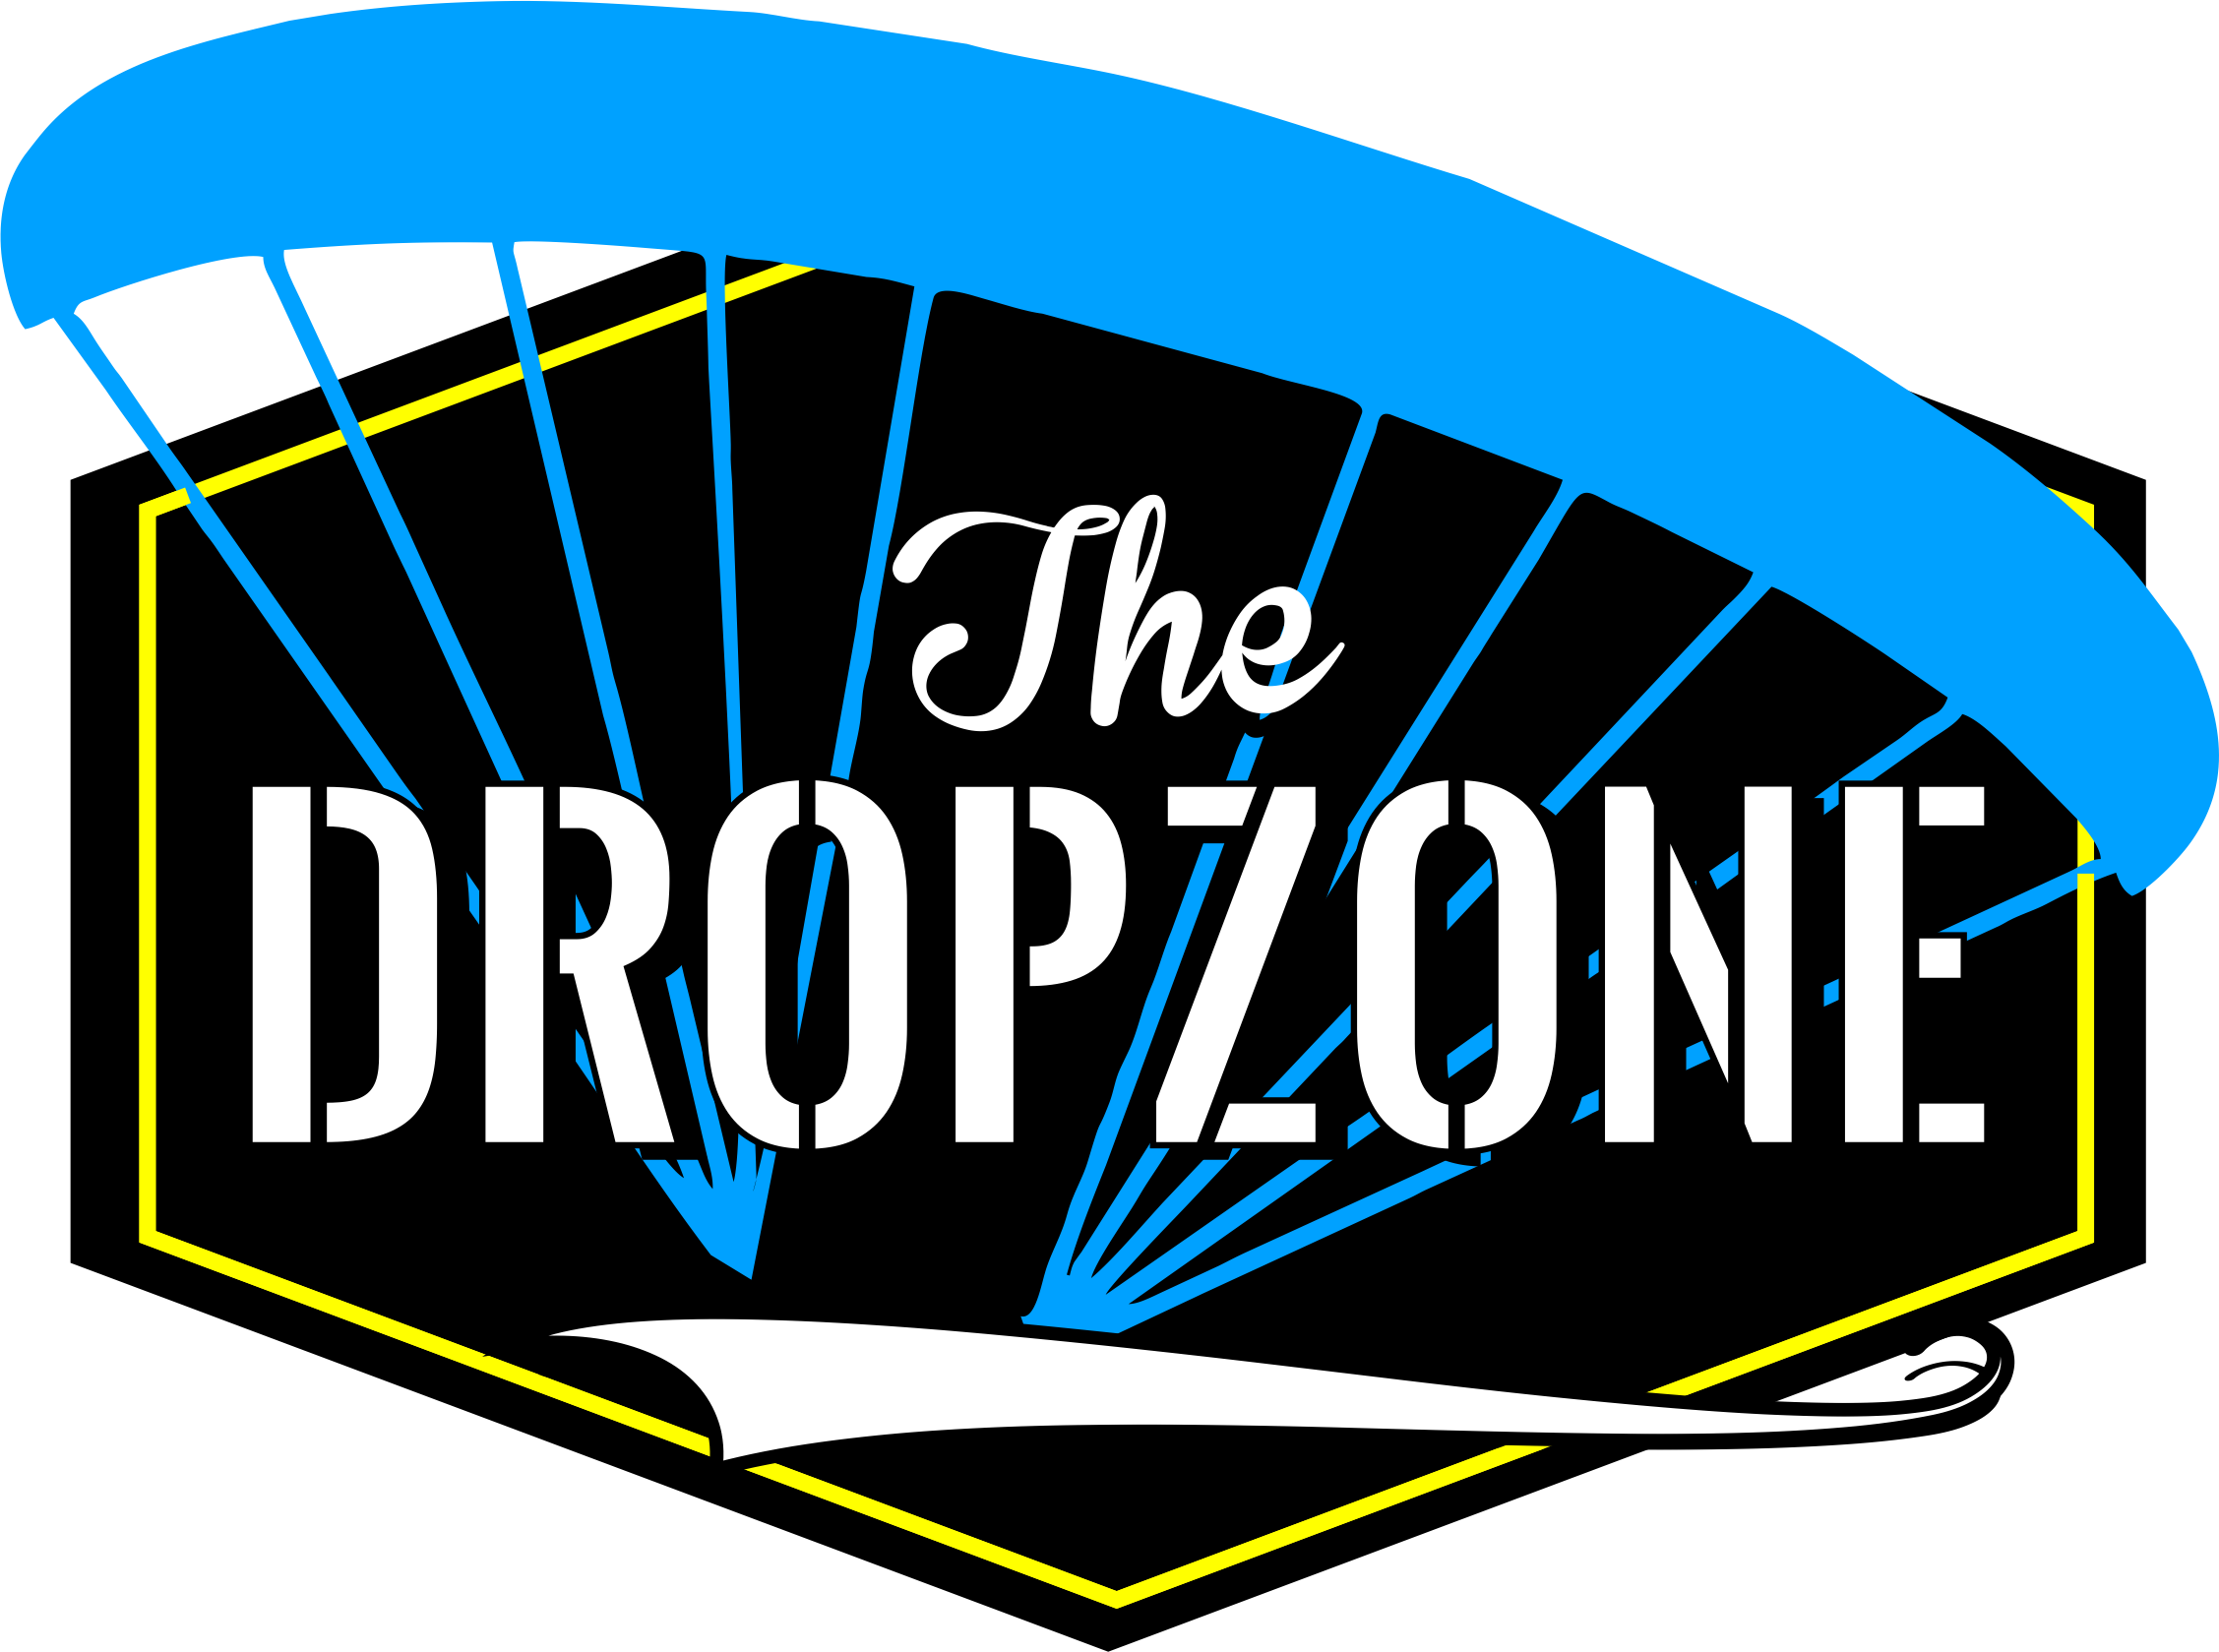 The DropZone Logo Cafe & Bar at Action Flight Hot air balloon and skydiving center Ras Al Khaimah